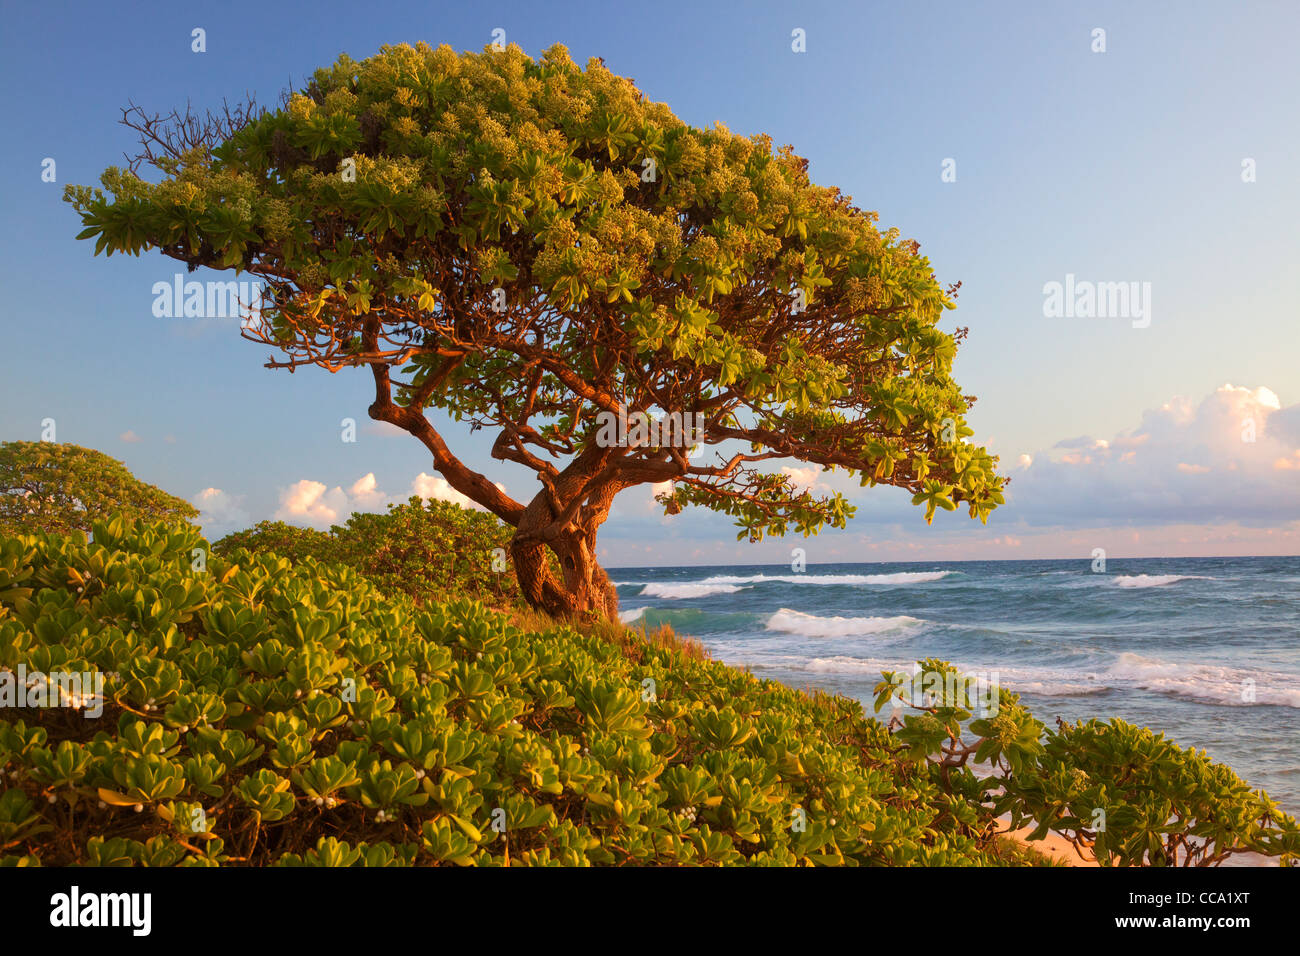 Nukoli'i Beach, also known as Kitchens Beach, Kauai, Hawaii. Stock Photo